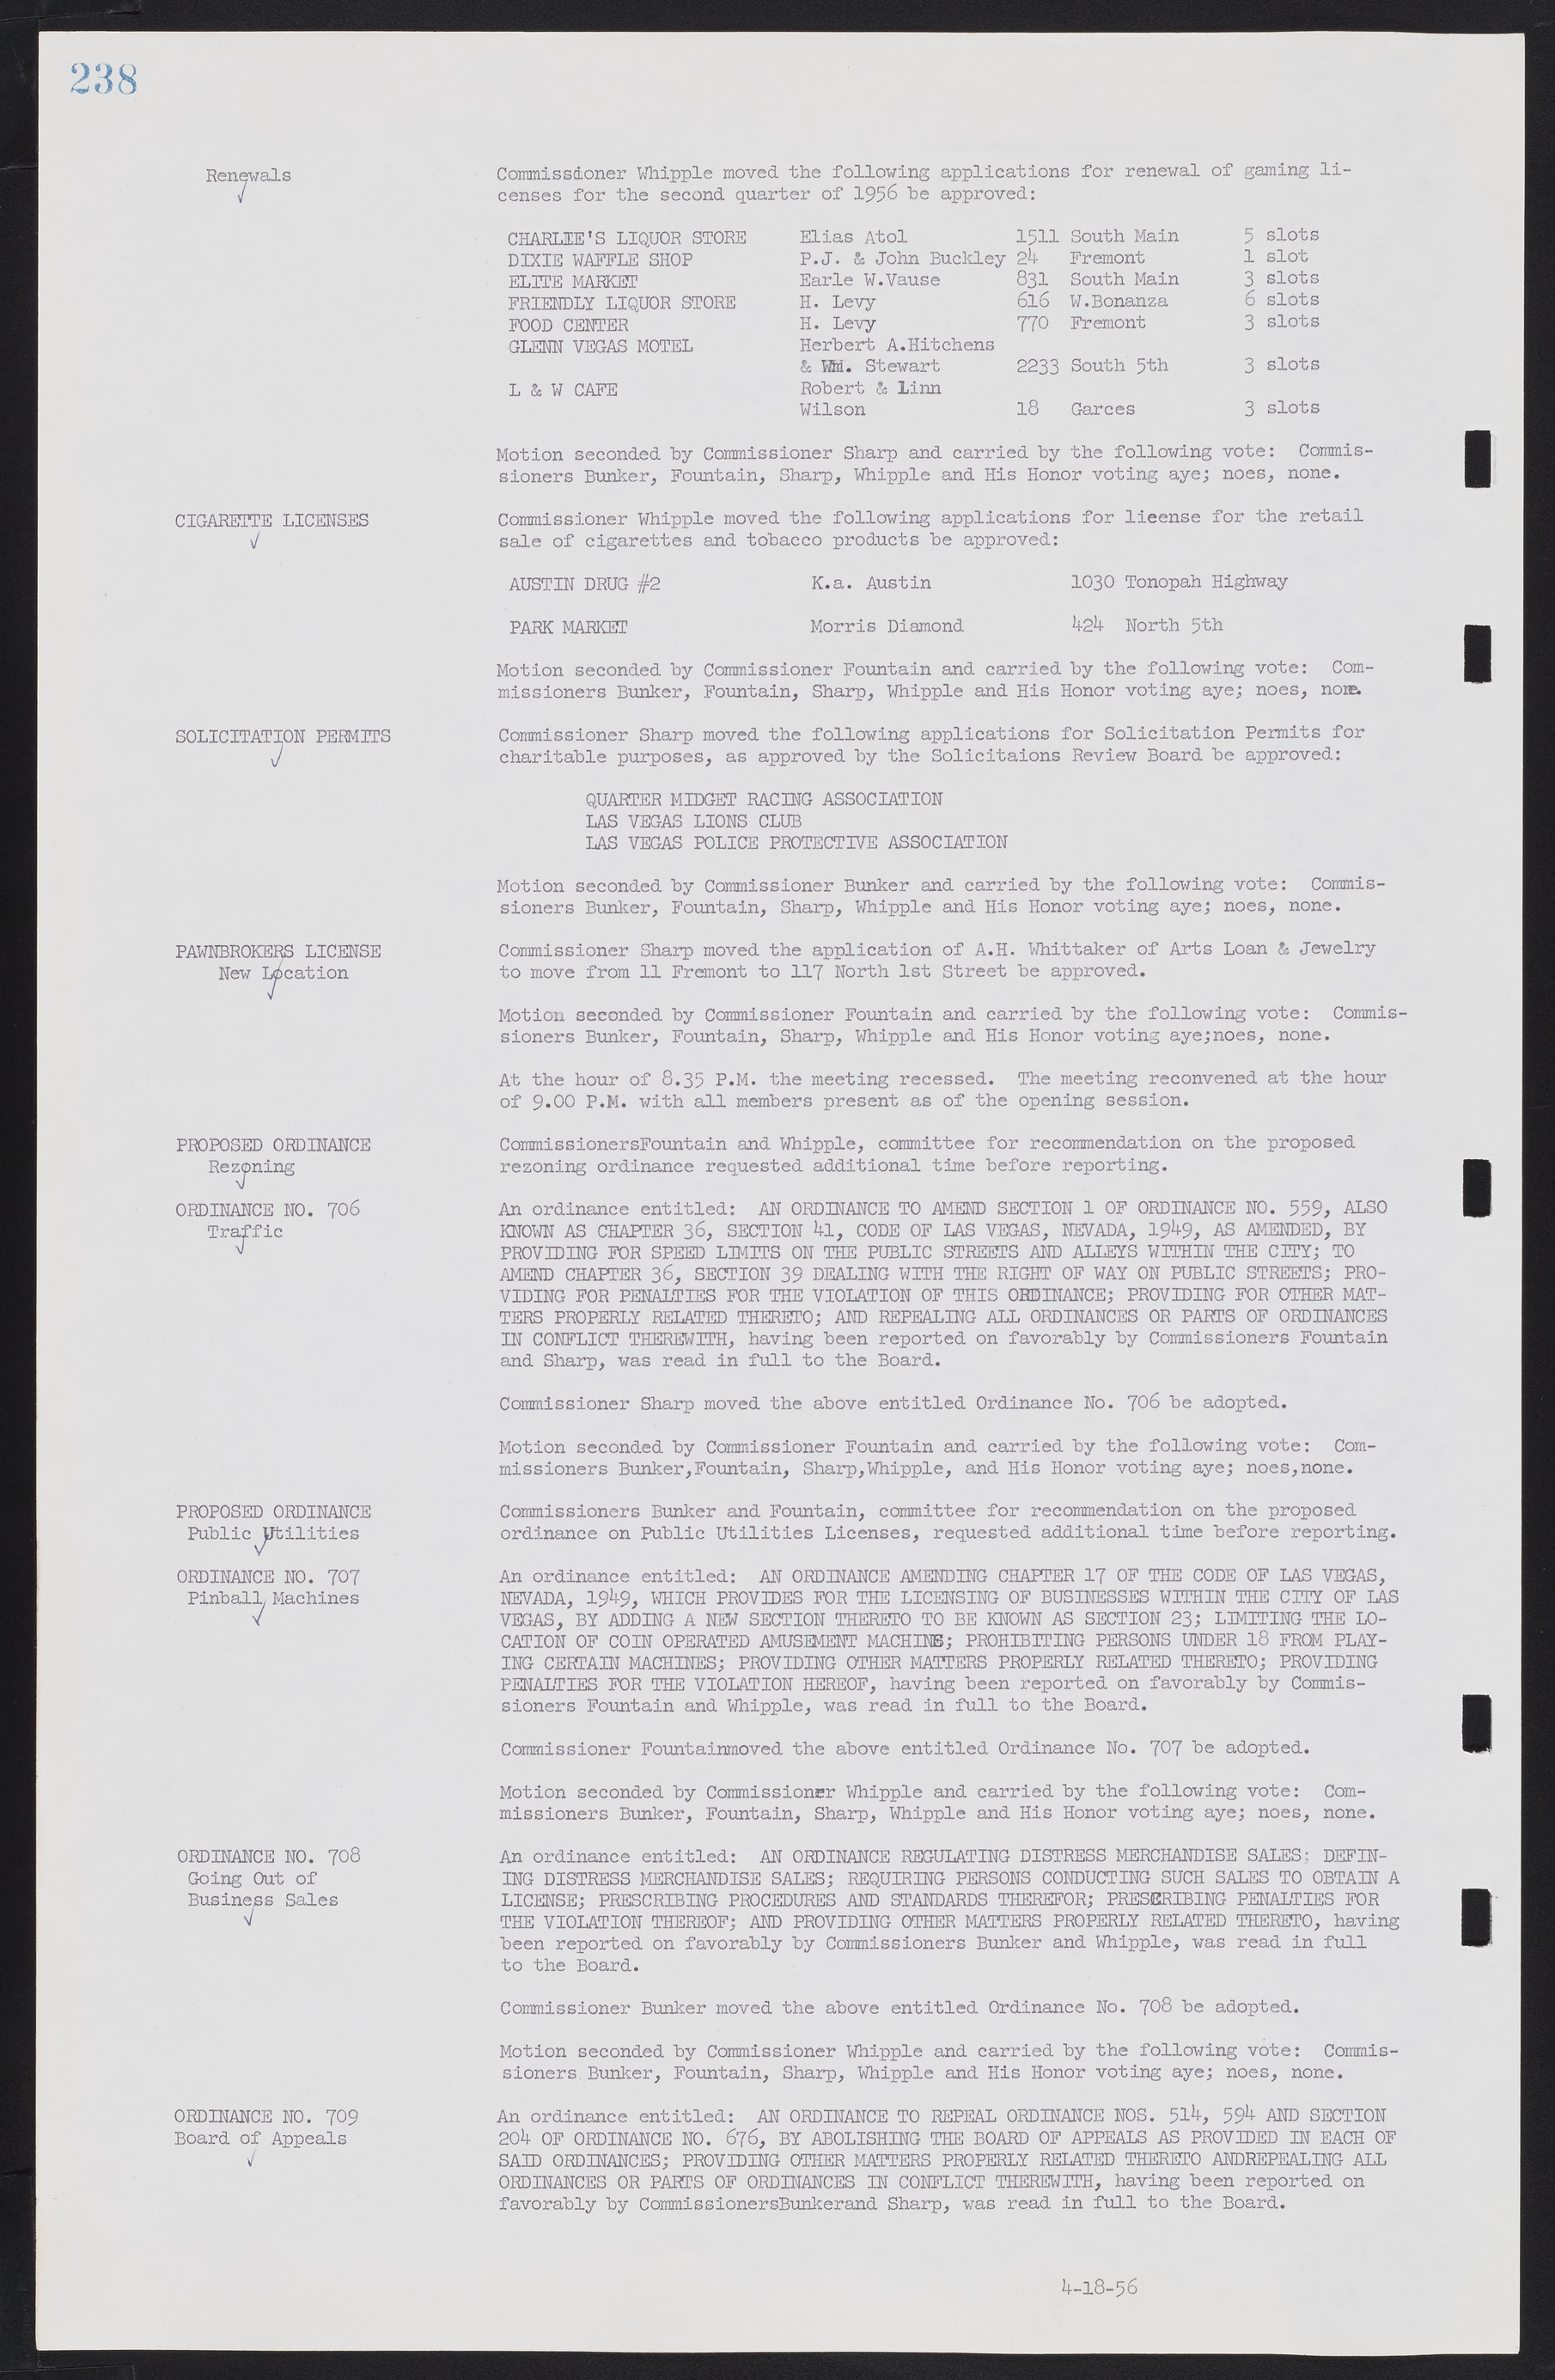 Las Vegas City Commission Minutes, September 21, 1955 to November 20, 1957, lvc000010-256